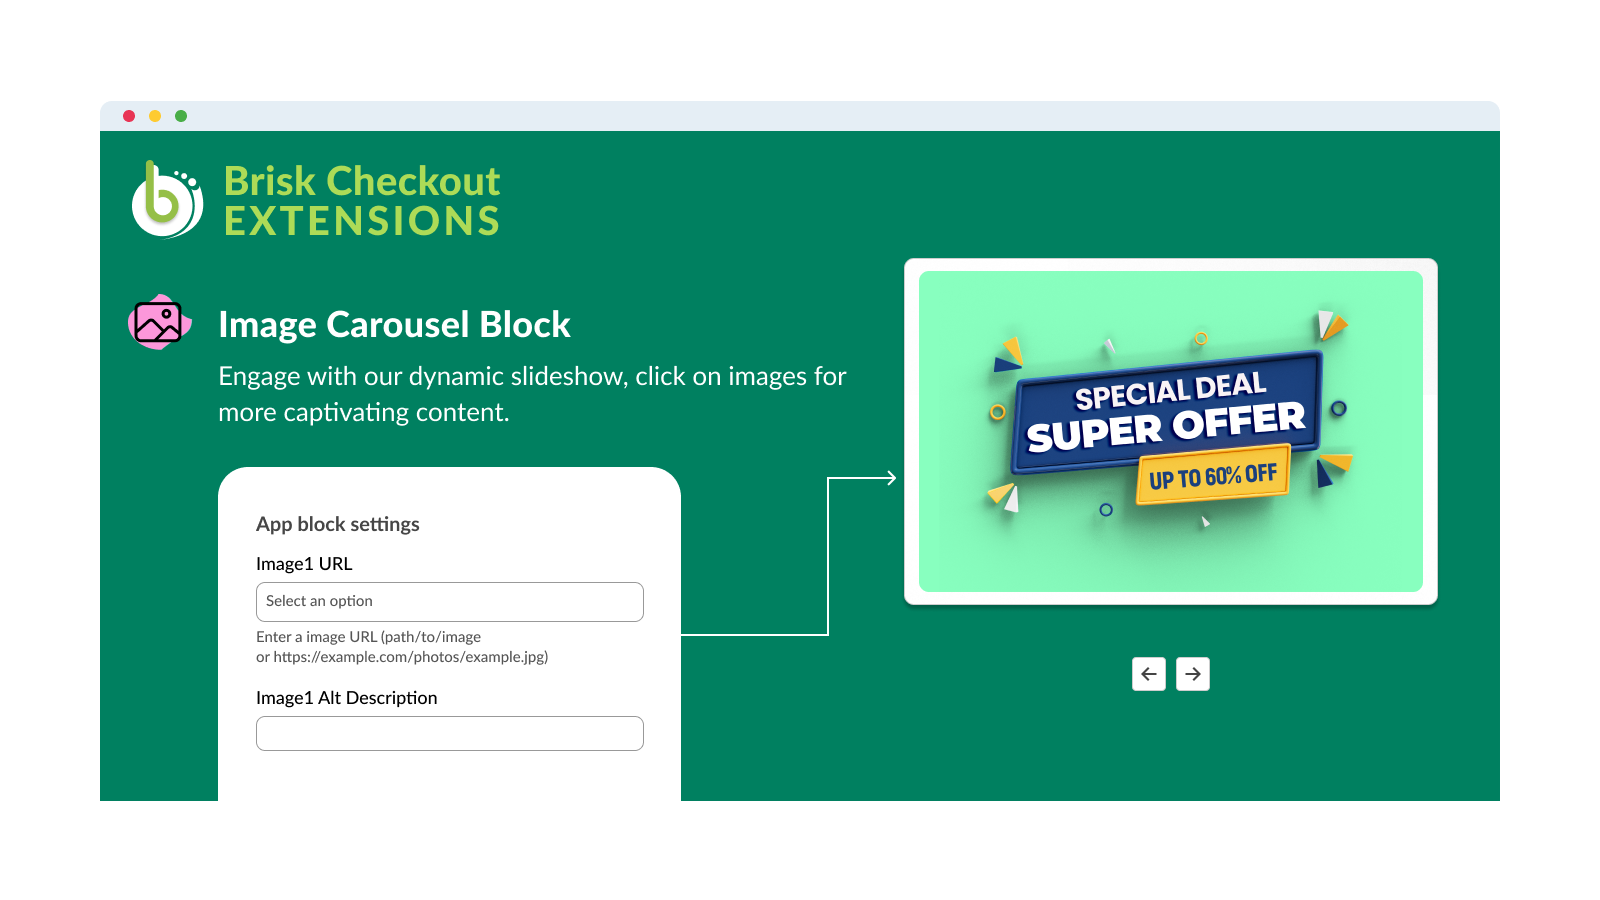 Brisk Checkout Extensions - Billedkarusel Block